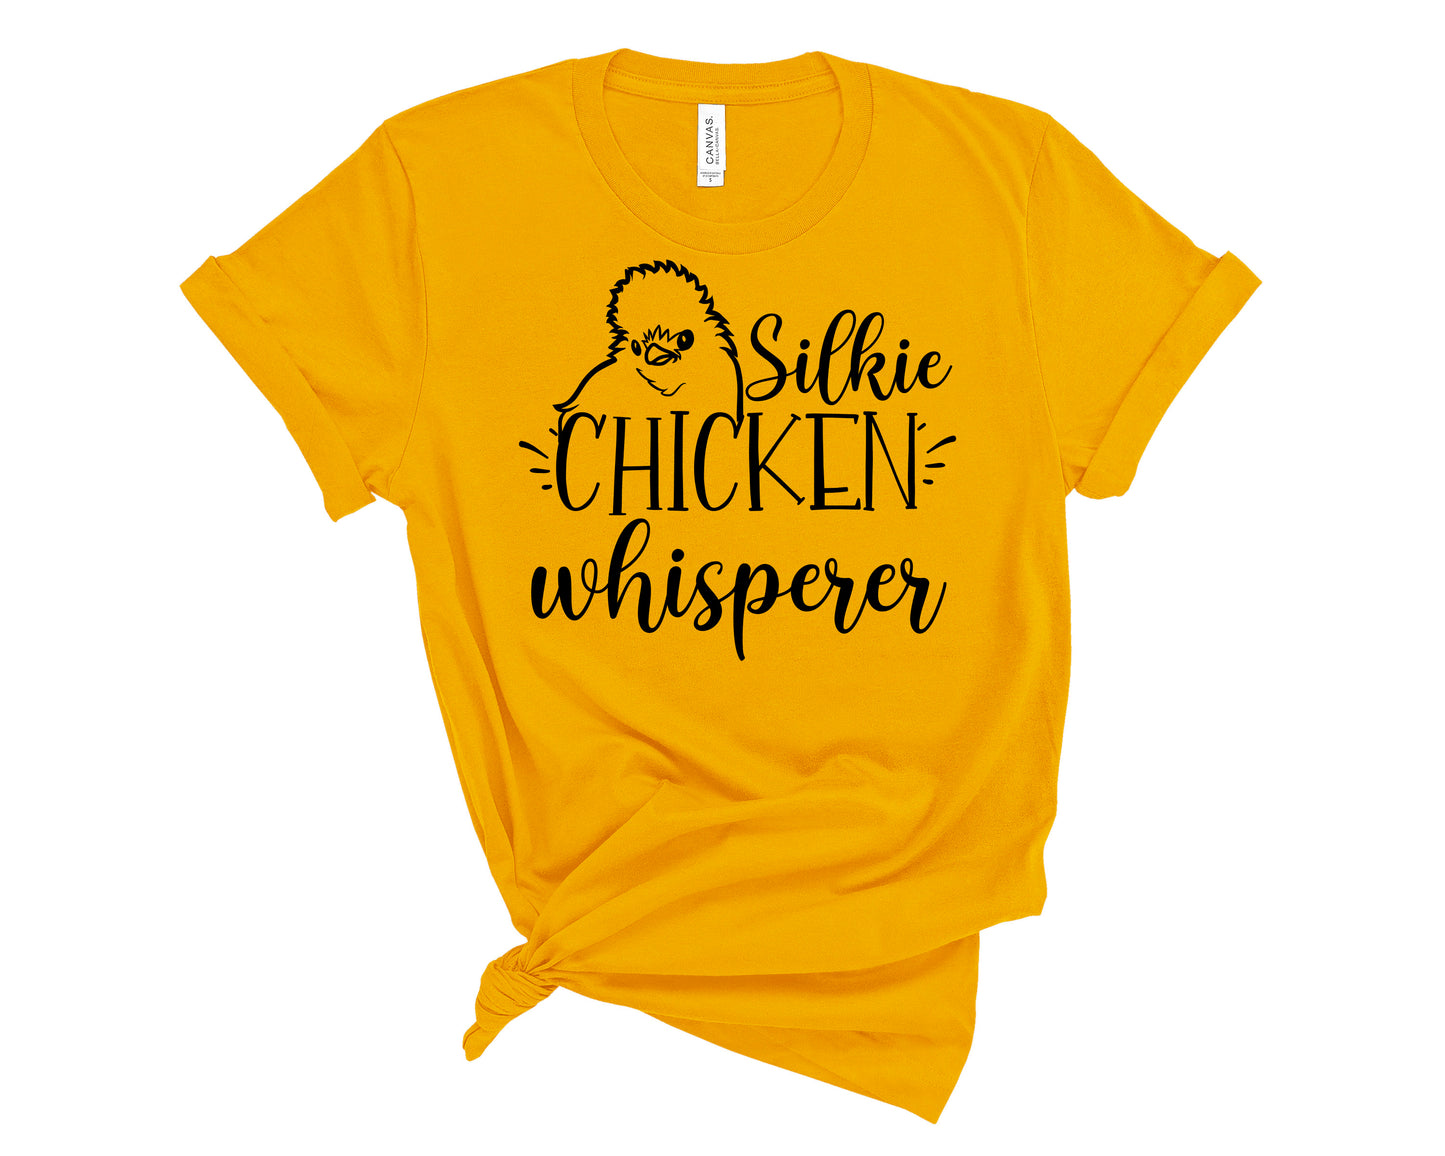 Silkie Chicken Whisperer shirt